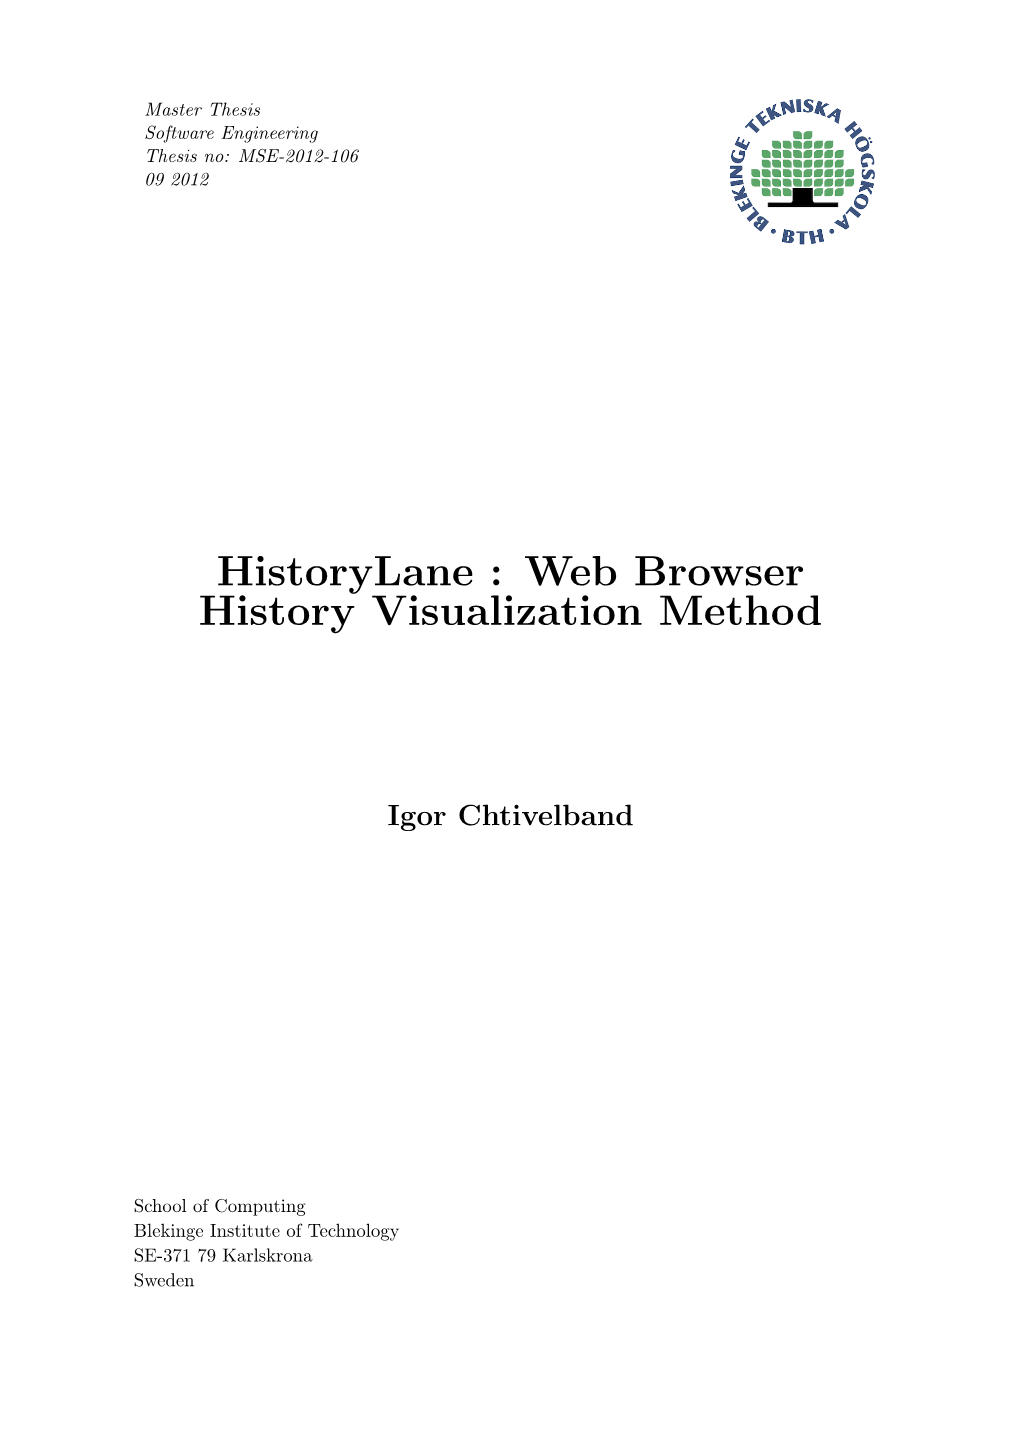 Web Browser History Visualization Method